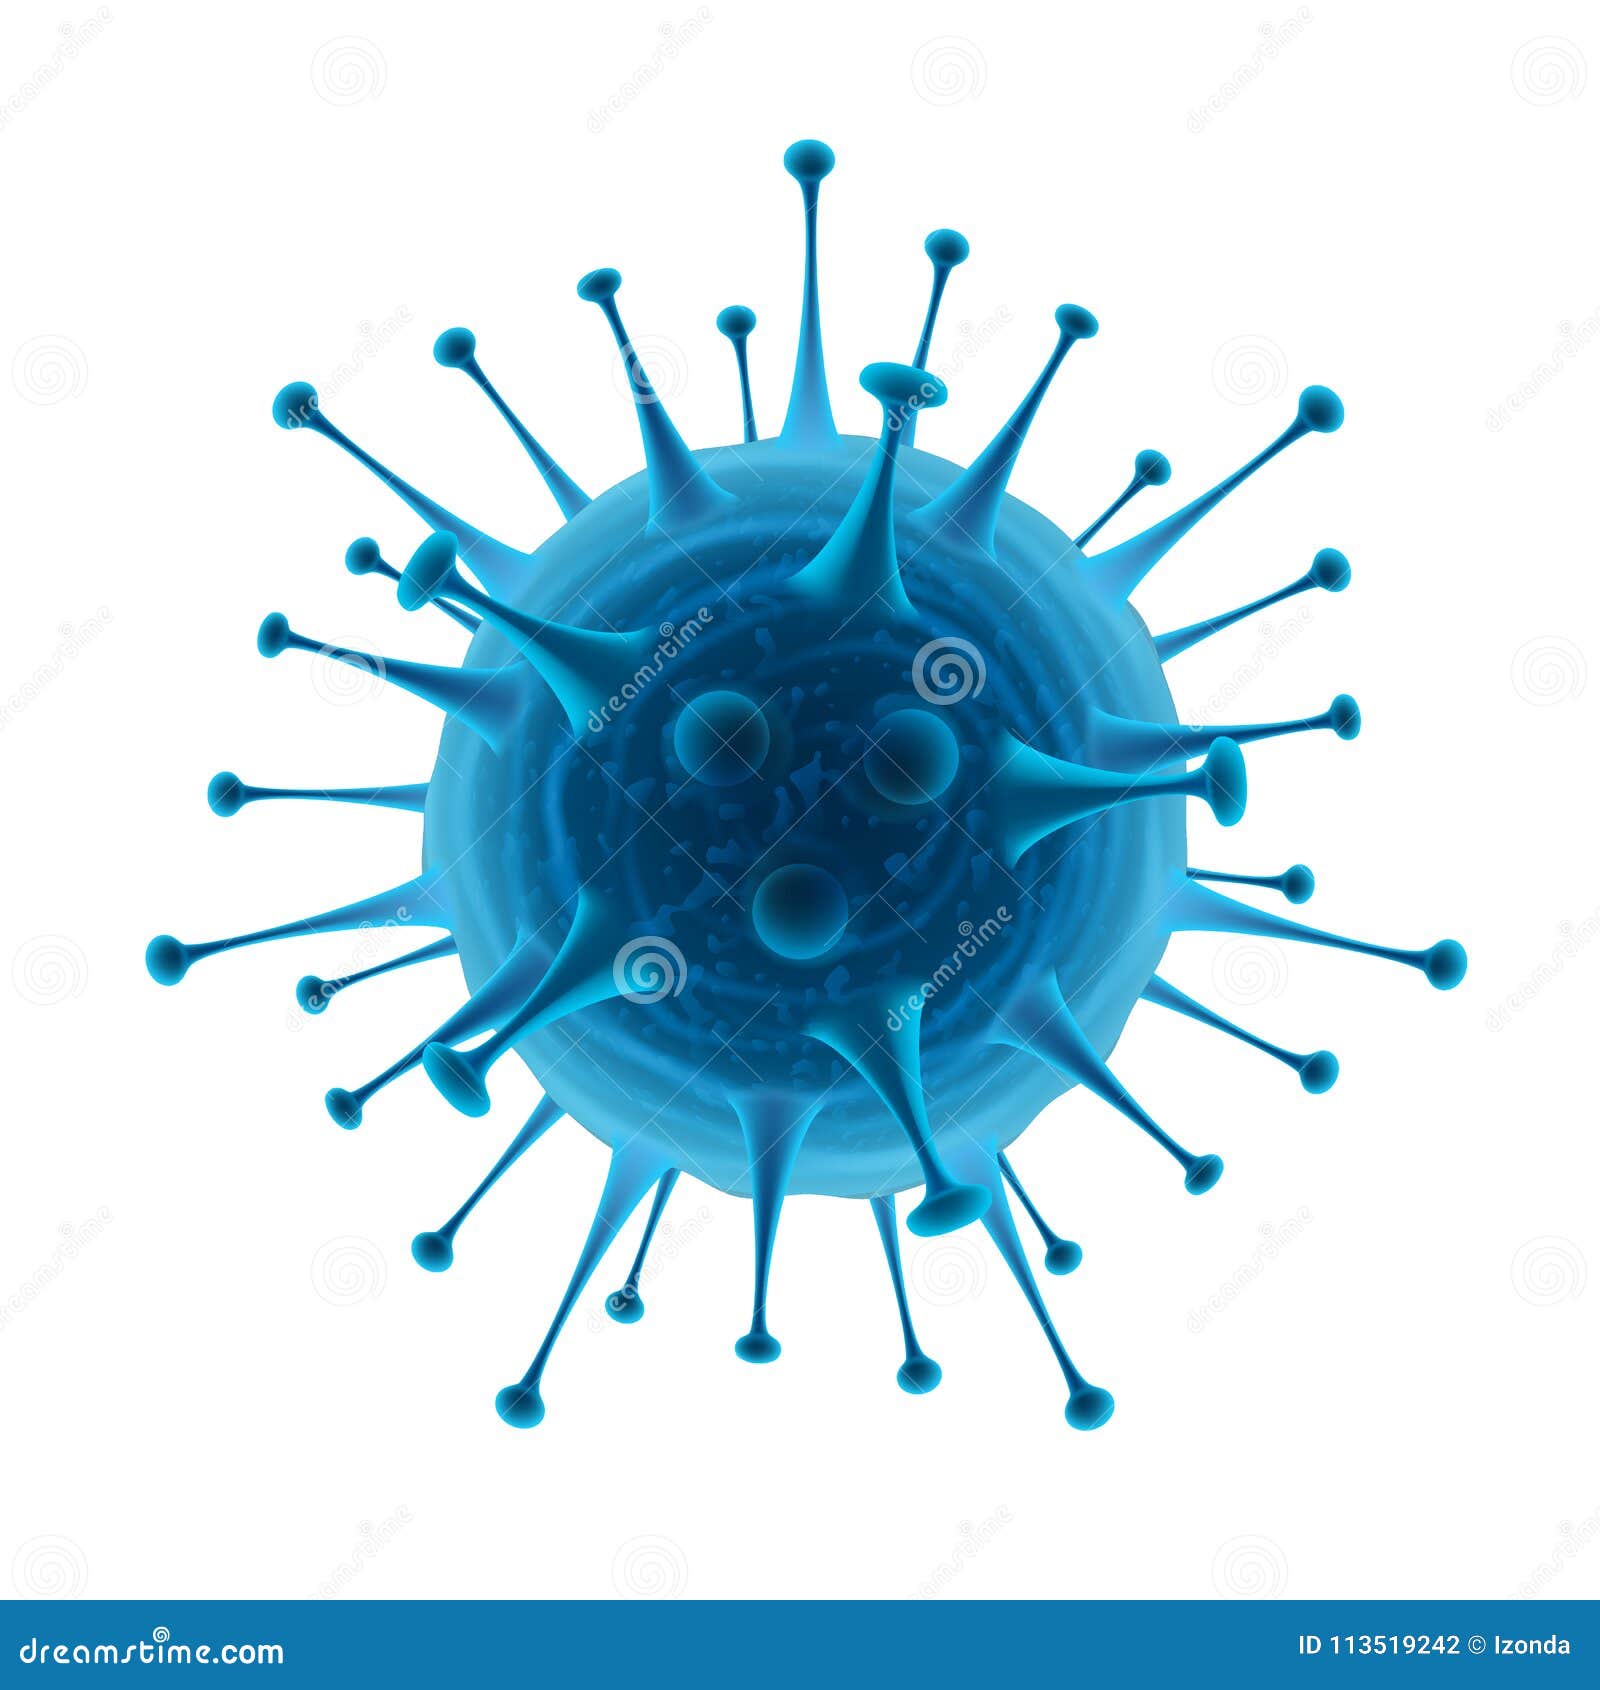 common virus or bacteria